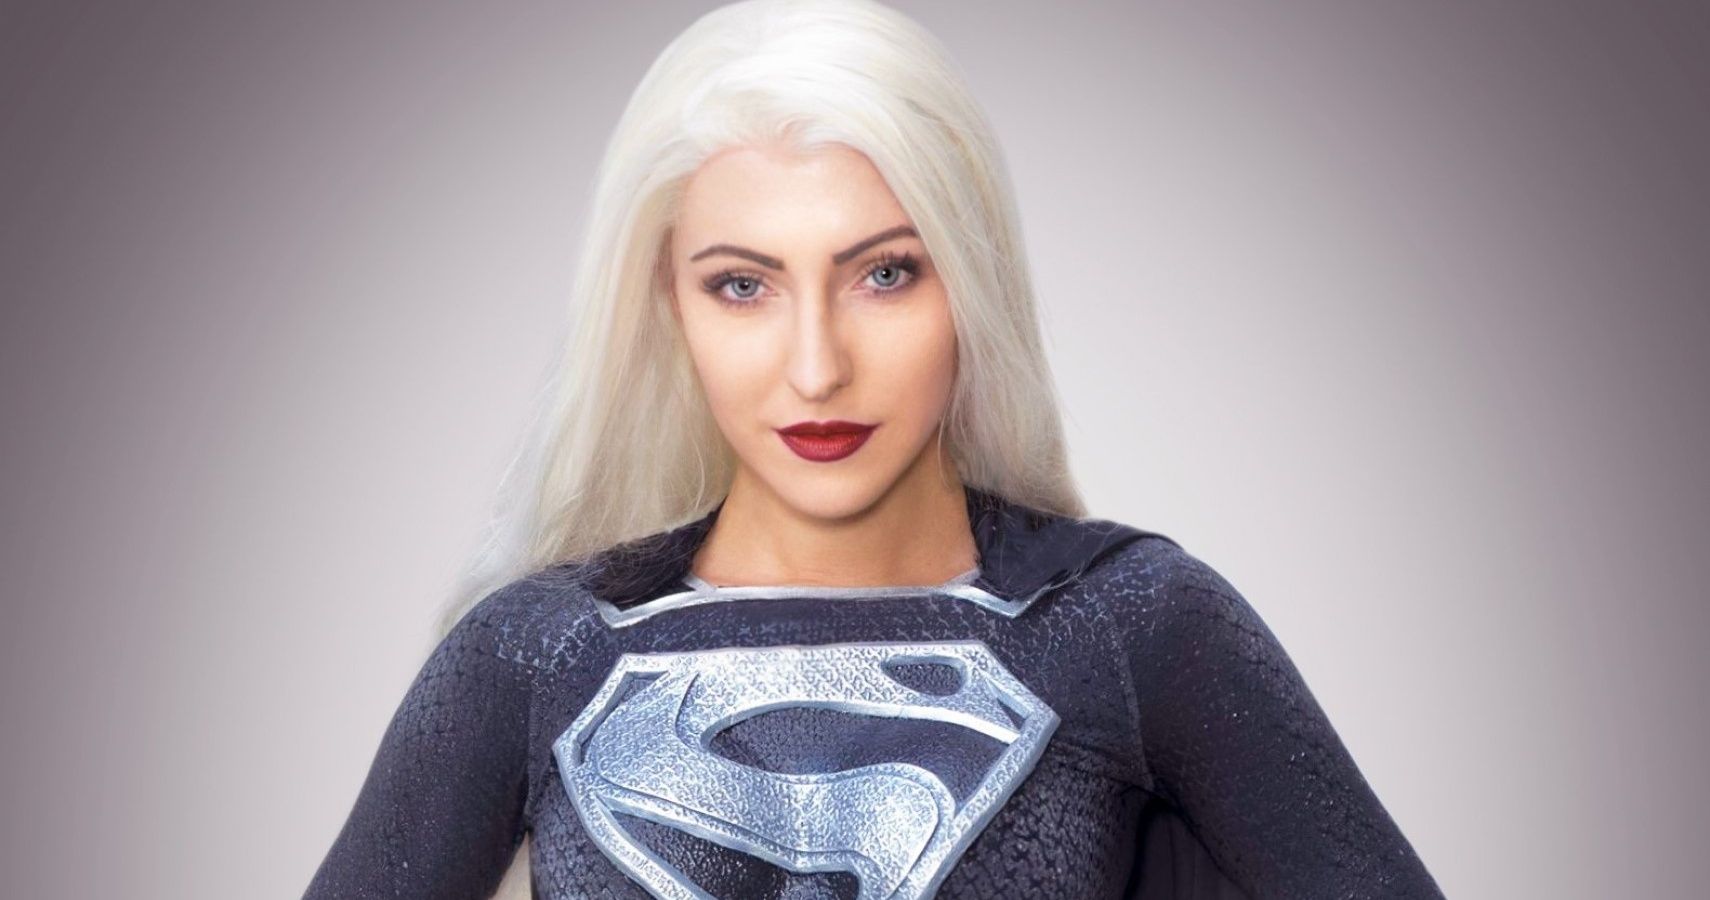 Supergirl cosplay